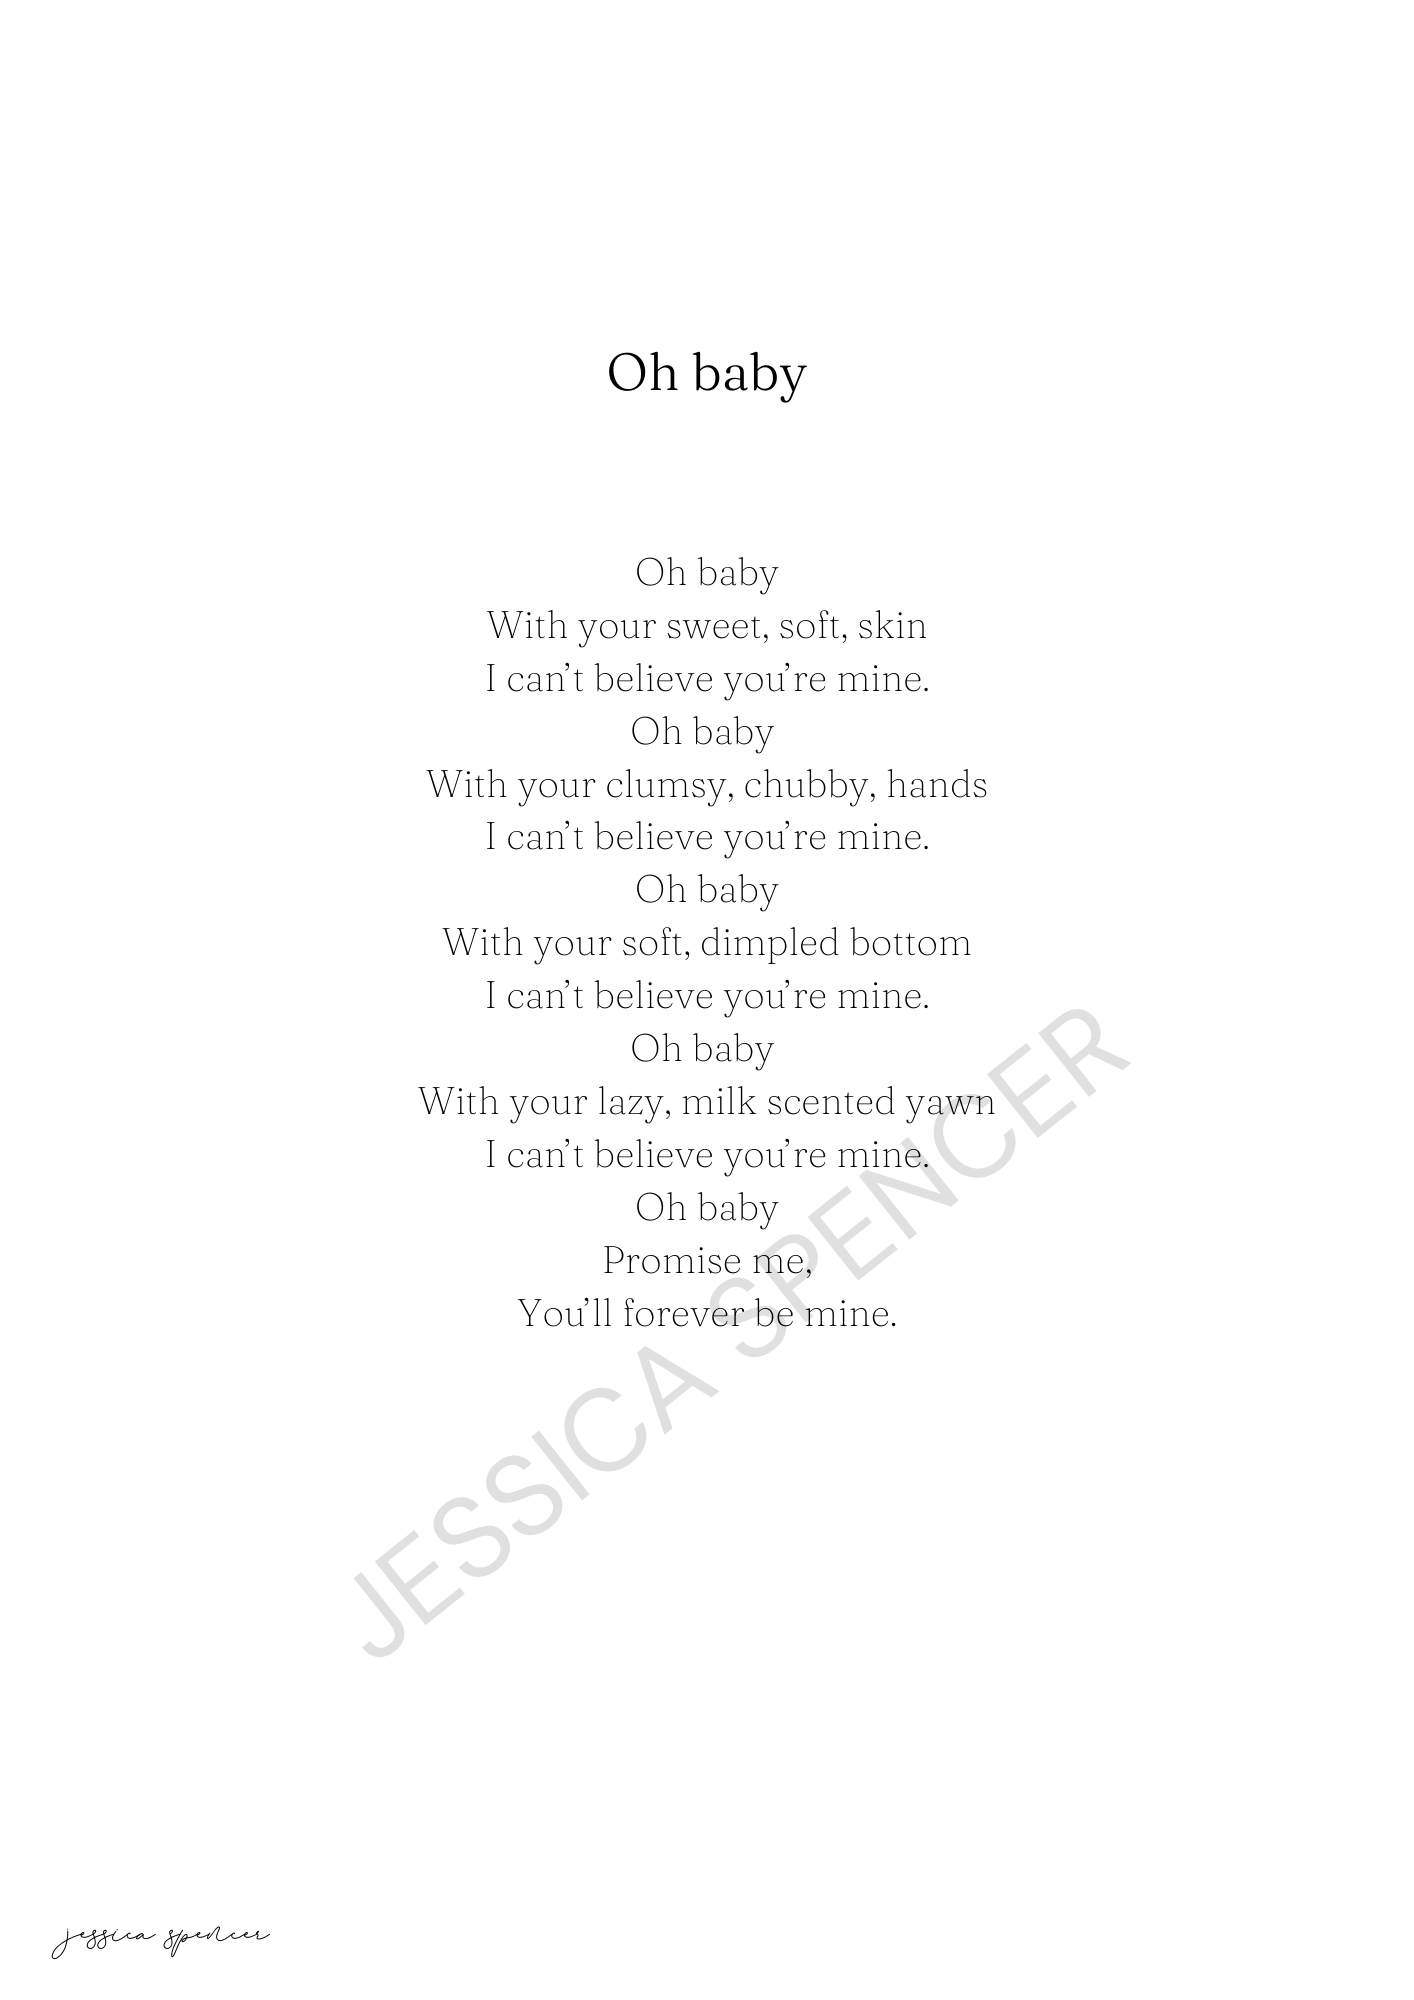 Oh Baby Poem